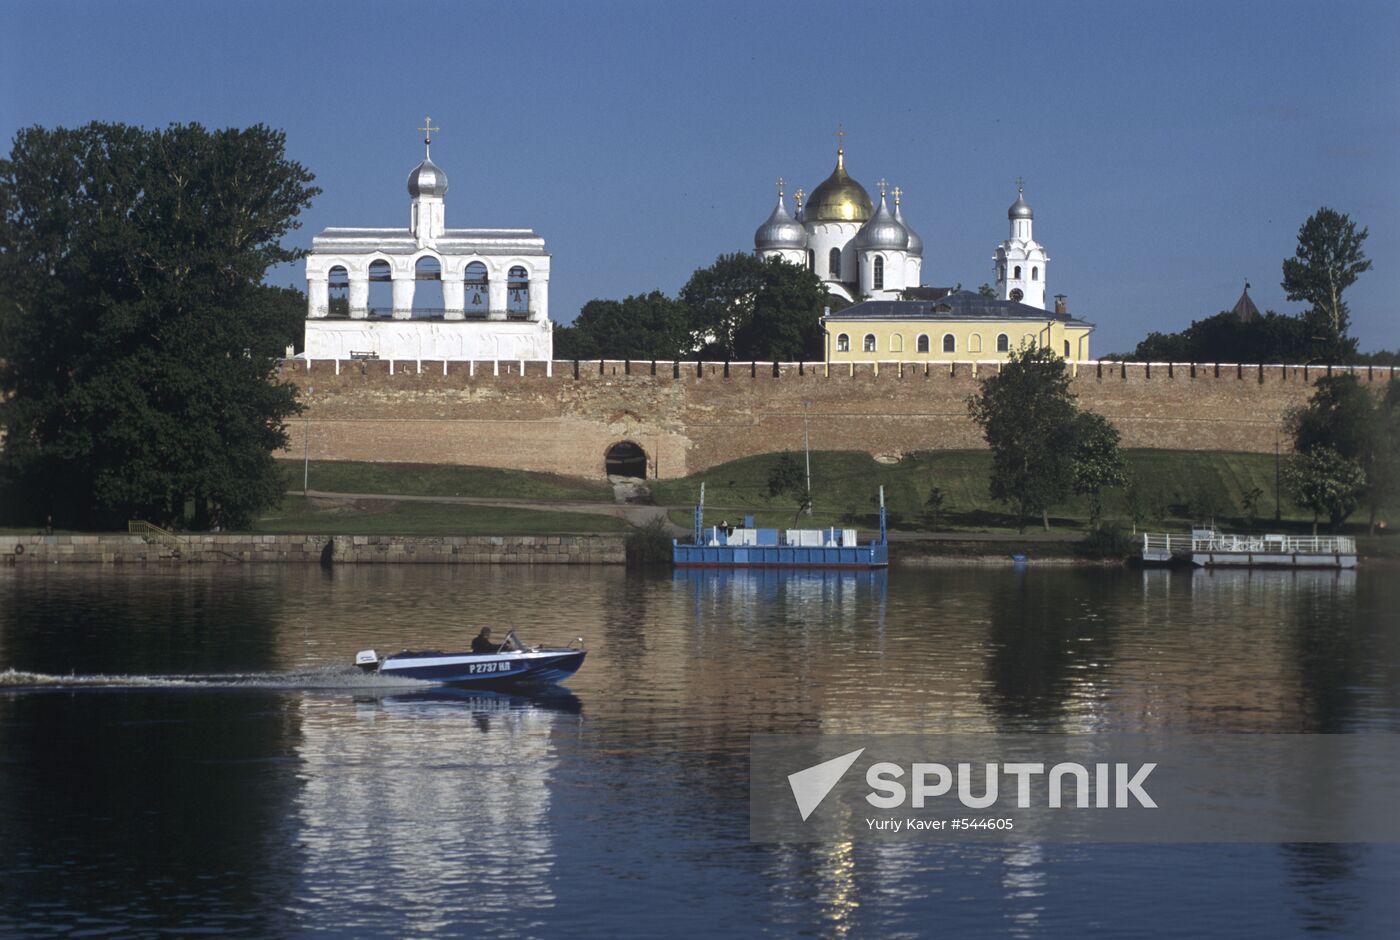 Veliky Novgorod's Kremlin